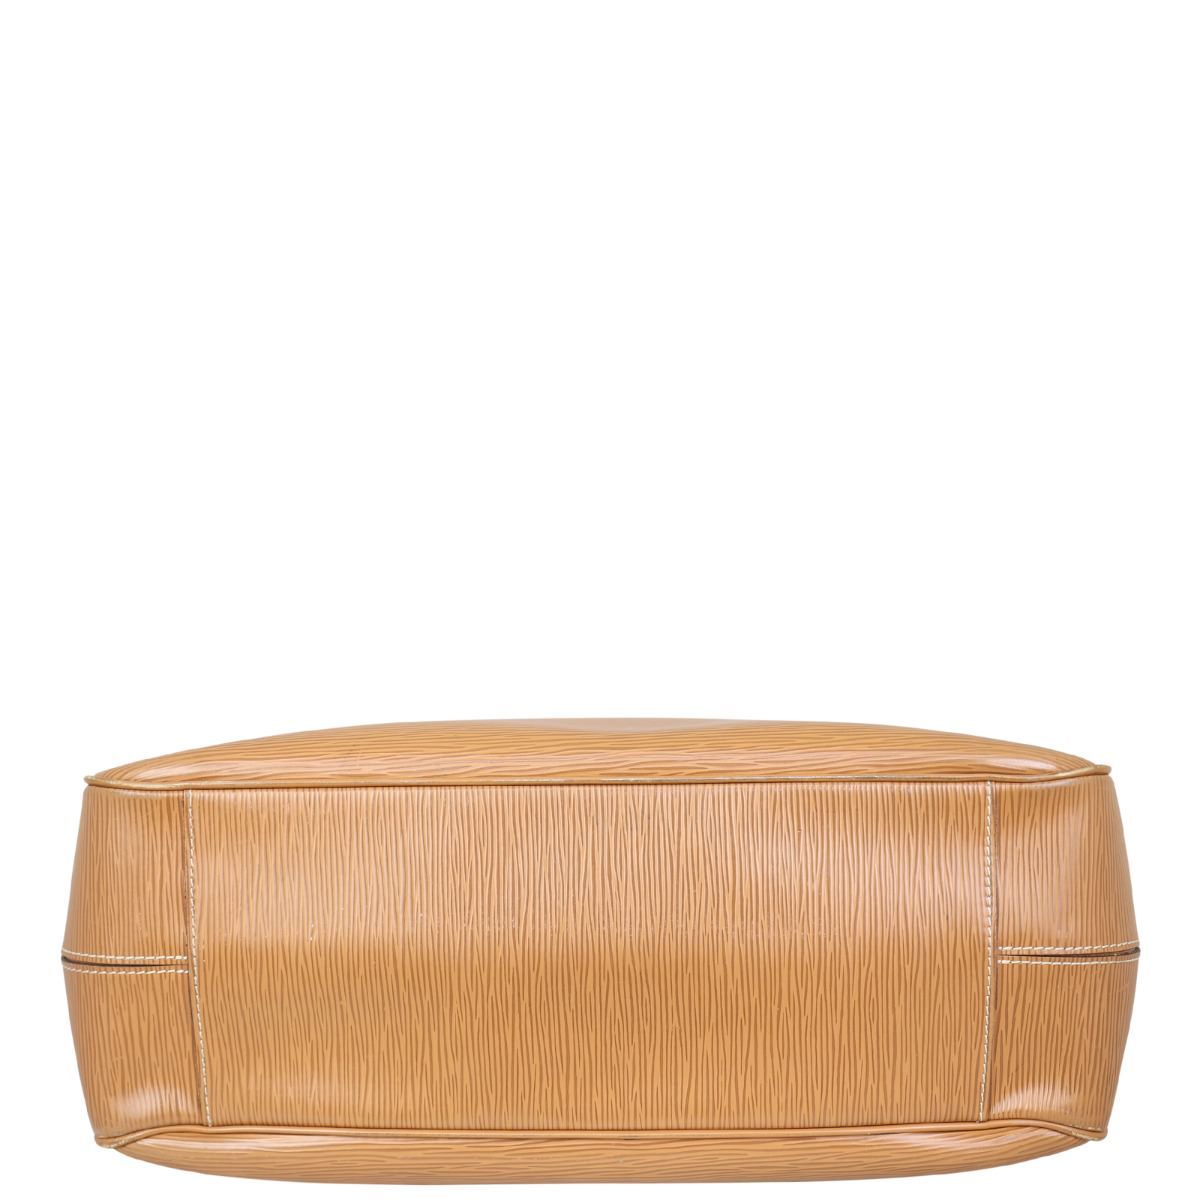 ❤️REVIEW - Louis Vuitton Passhii (Passy) GM Epi Bag 